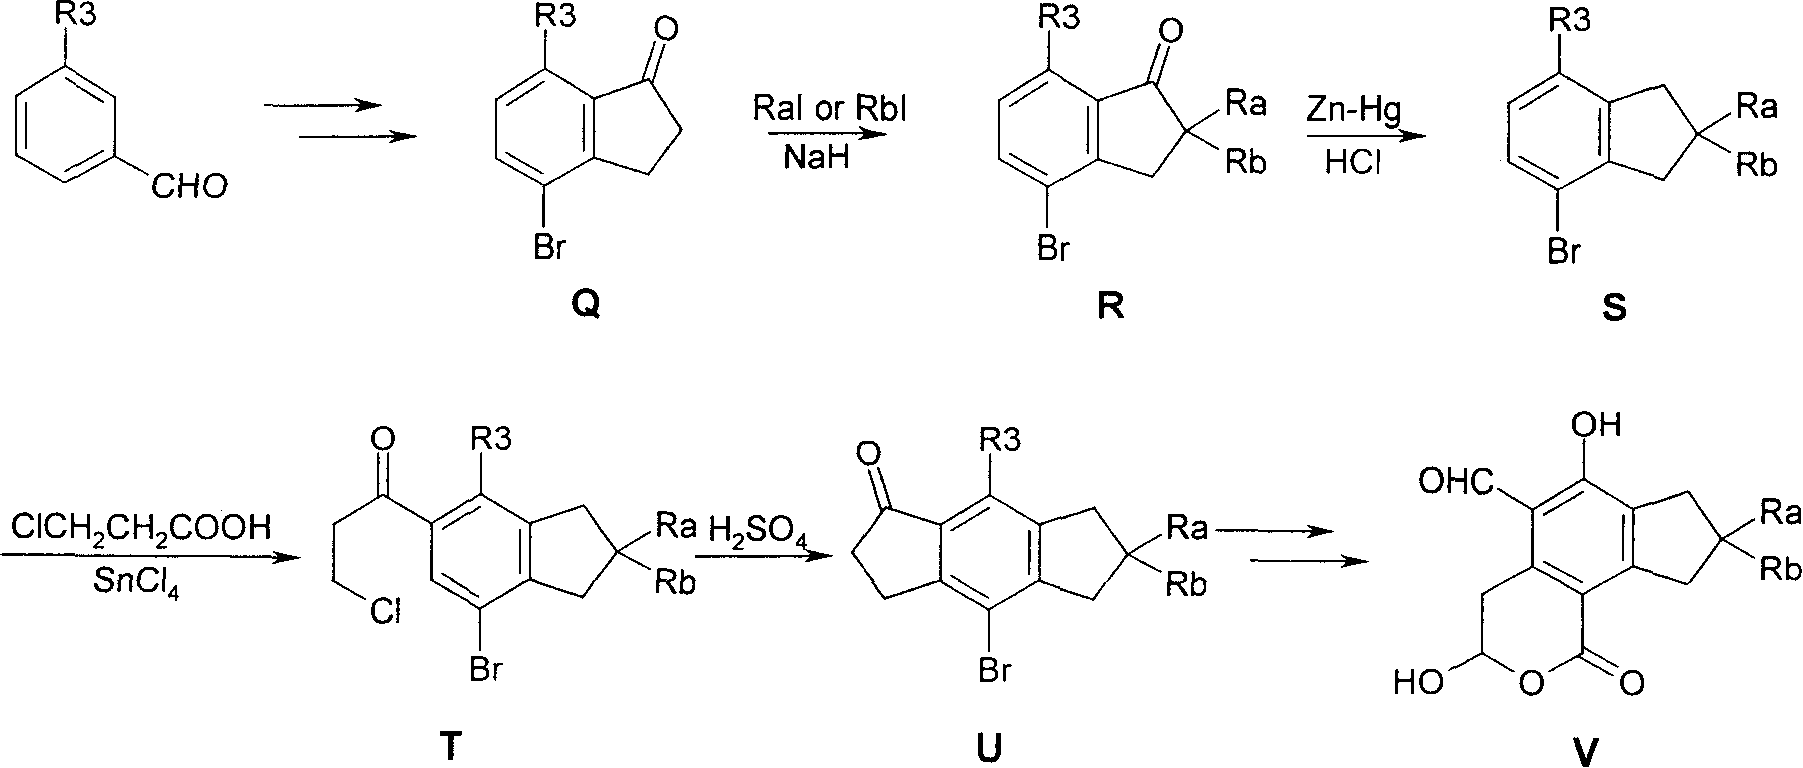 3,4-dihydro-iii 2 benzopyran-1 ketone kind compound, its preparation method and use